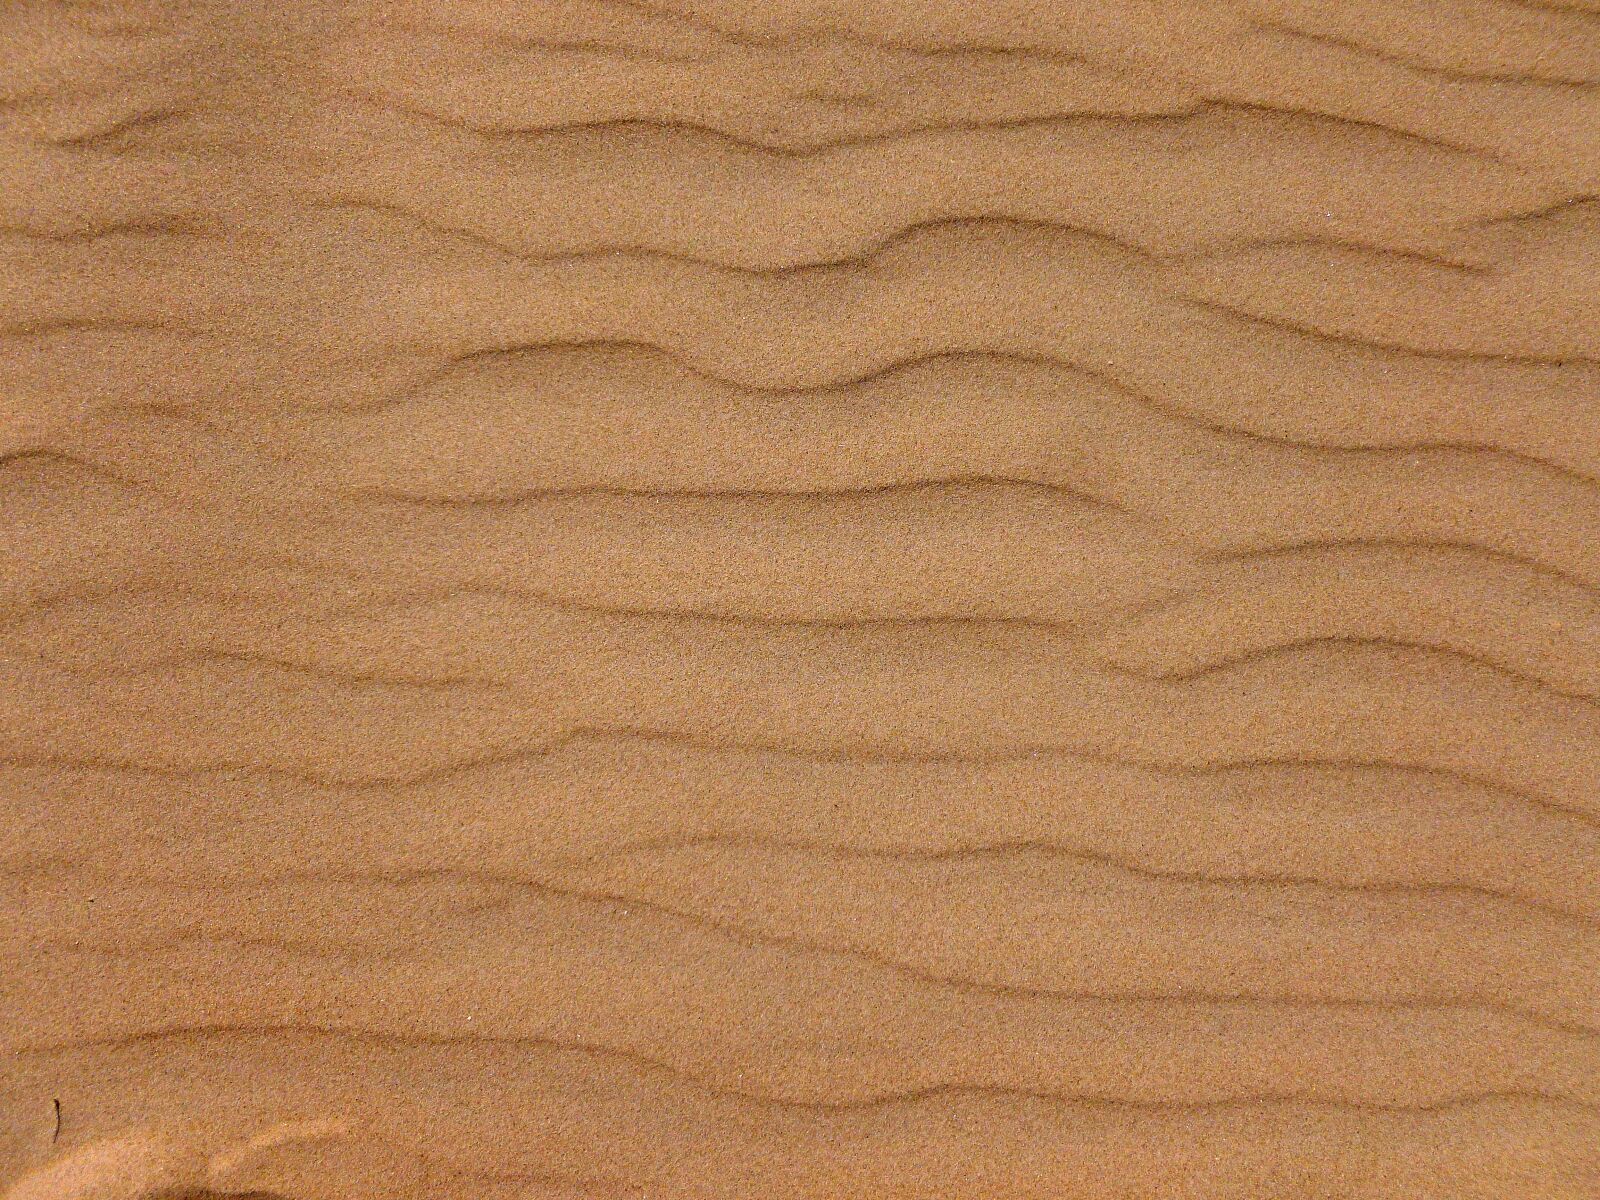 Panasonic DMC-FS37 sample photo. Sand, wave, texture photography